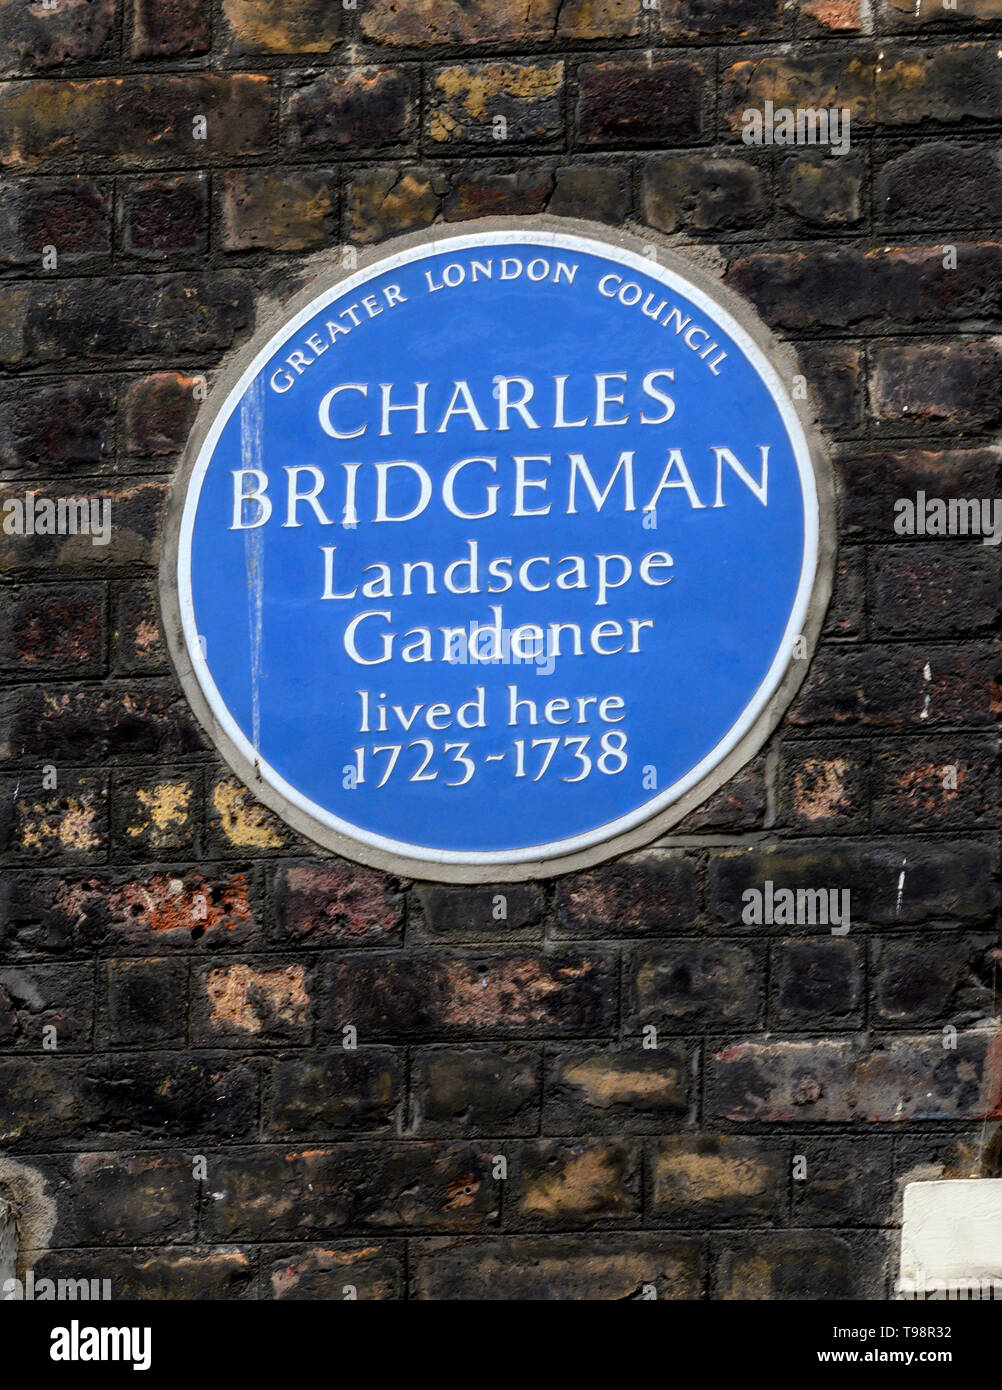 El Greater London placa azul marcando una casa del jardinero Bridgeman 1723-1738 Charles Broadwick Street, Soho, London, UK Foto de stock